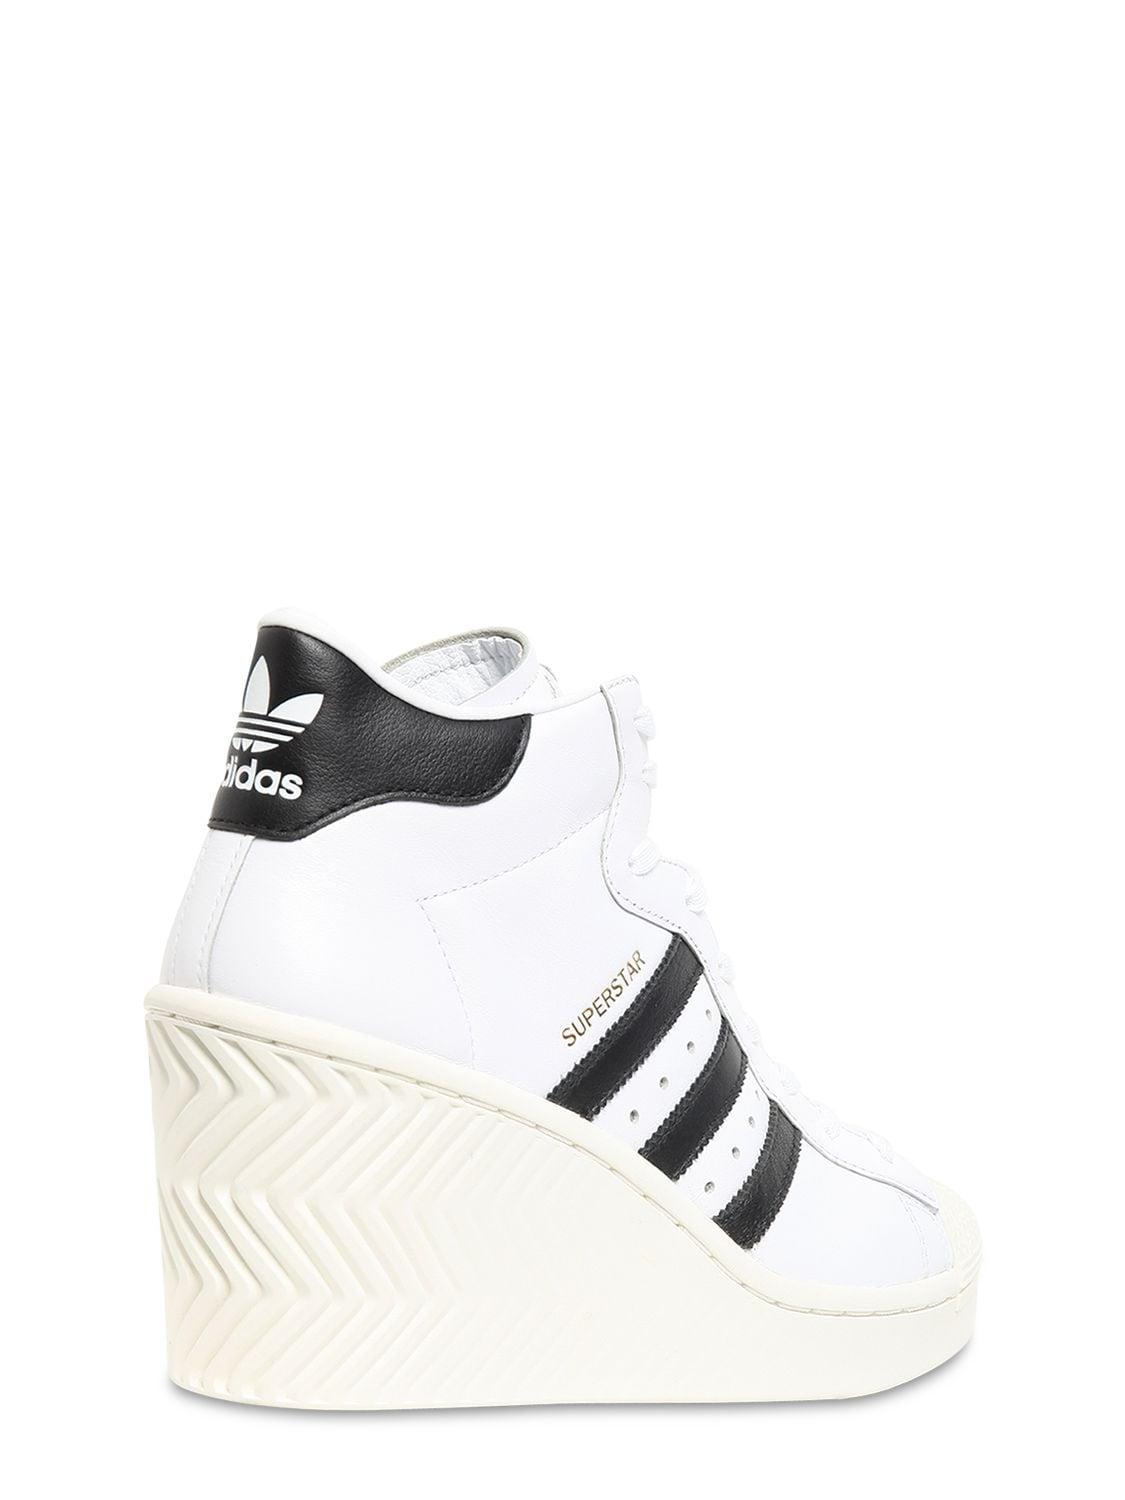 adidas Originals 90mm Superstar Ellure Sneakers in White | Lyst